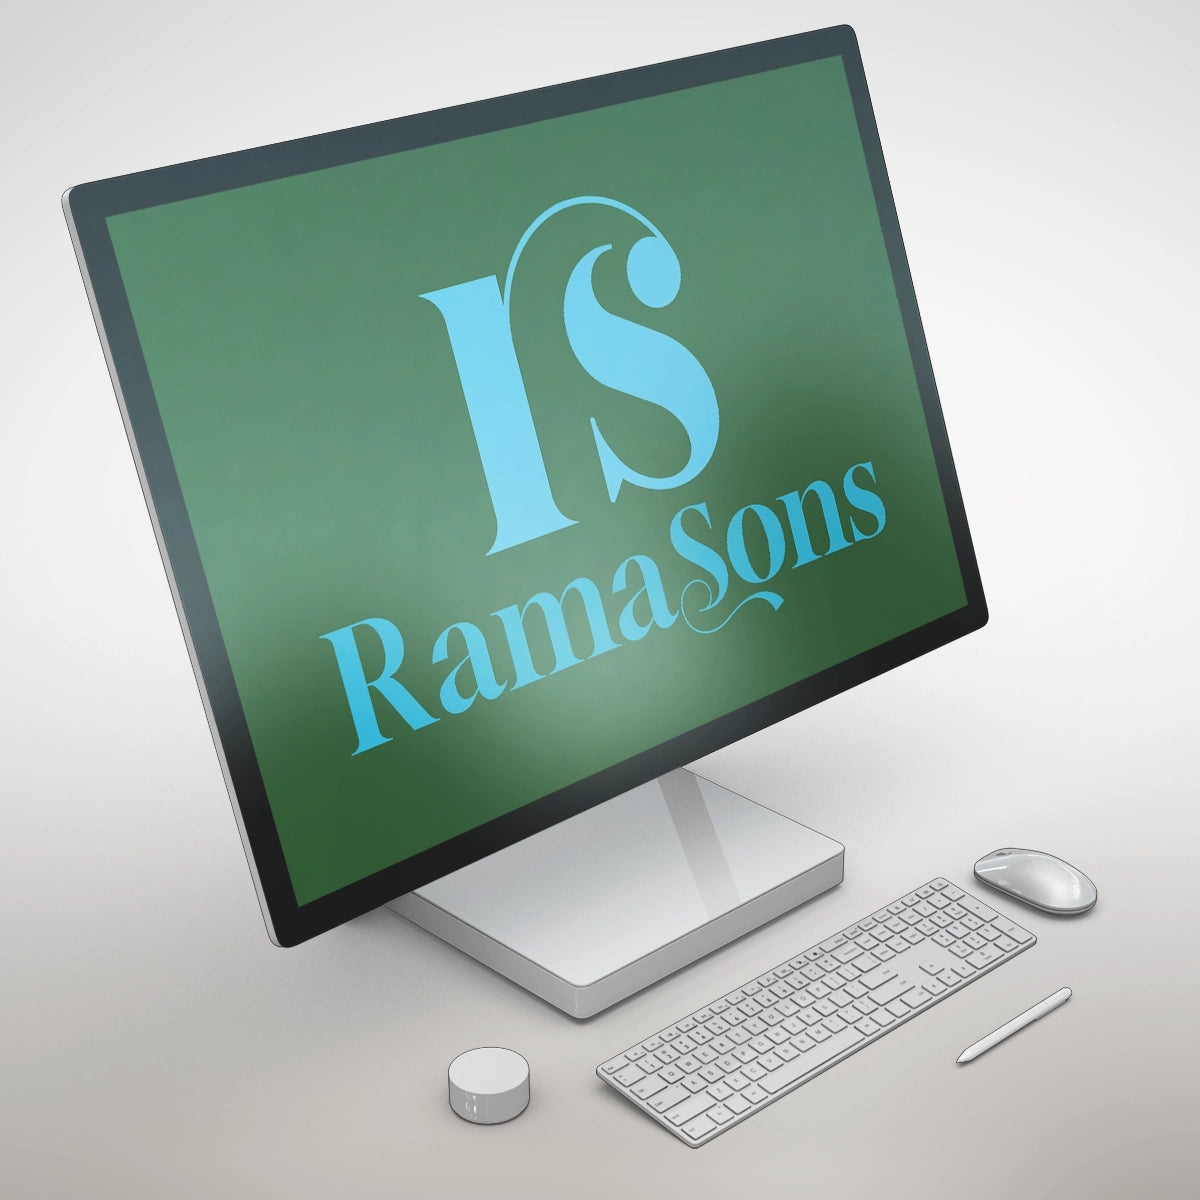 Ramasons.com